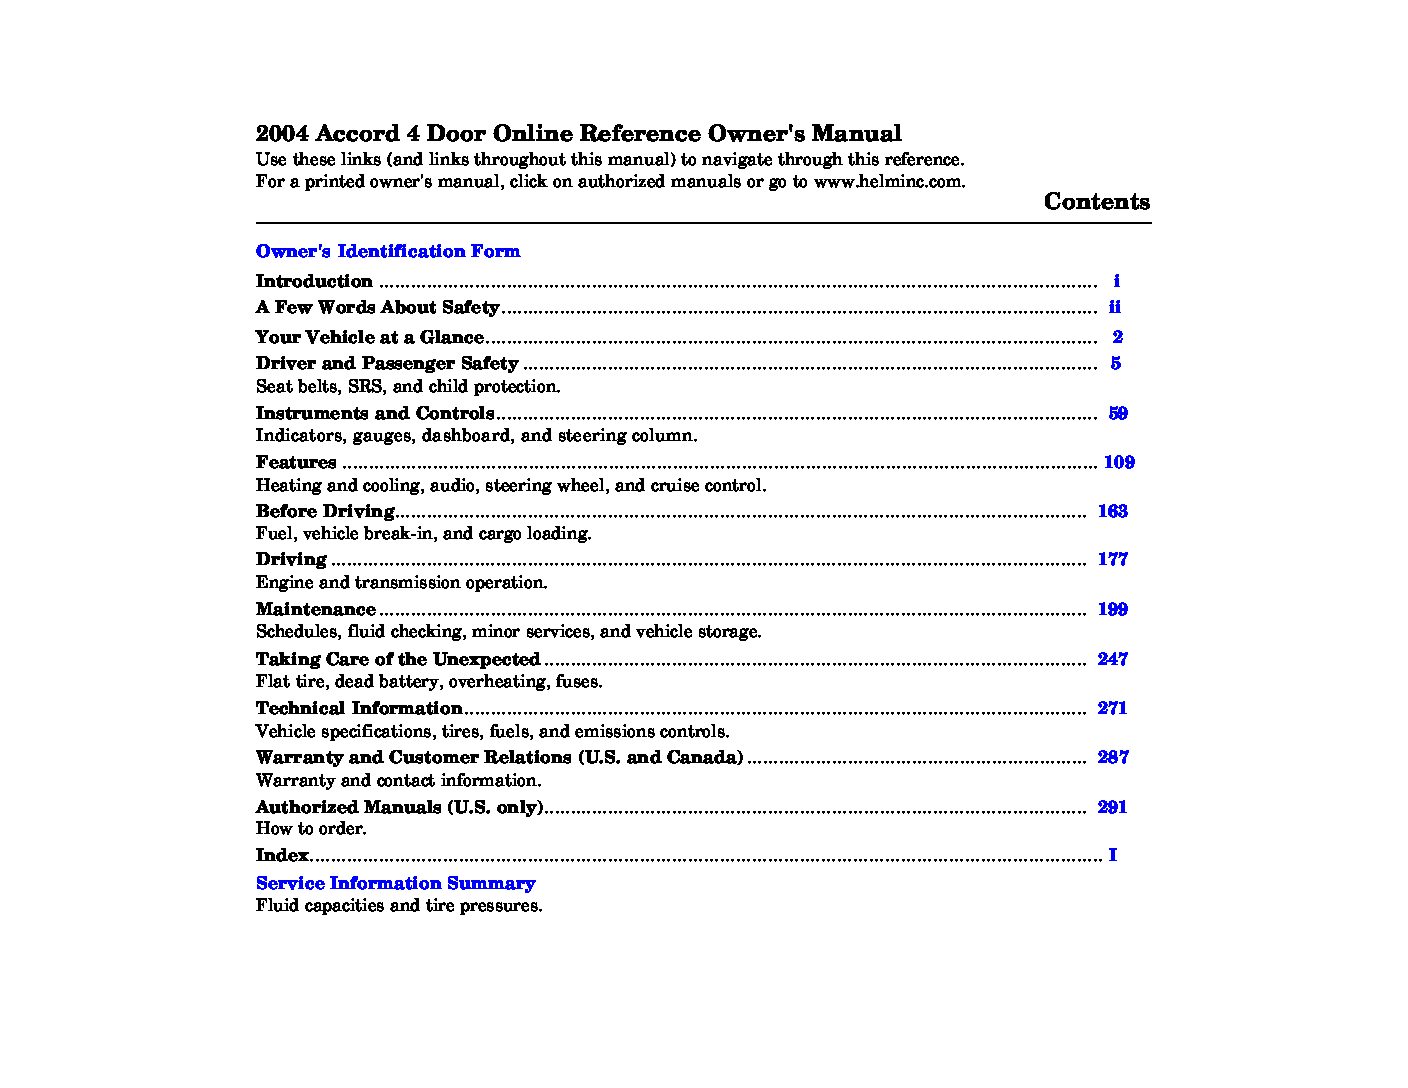 2004 HONDA ACCORD LX OWNERS MANUAL PDF